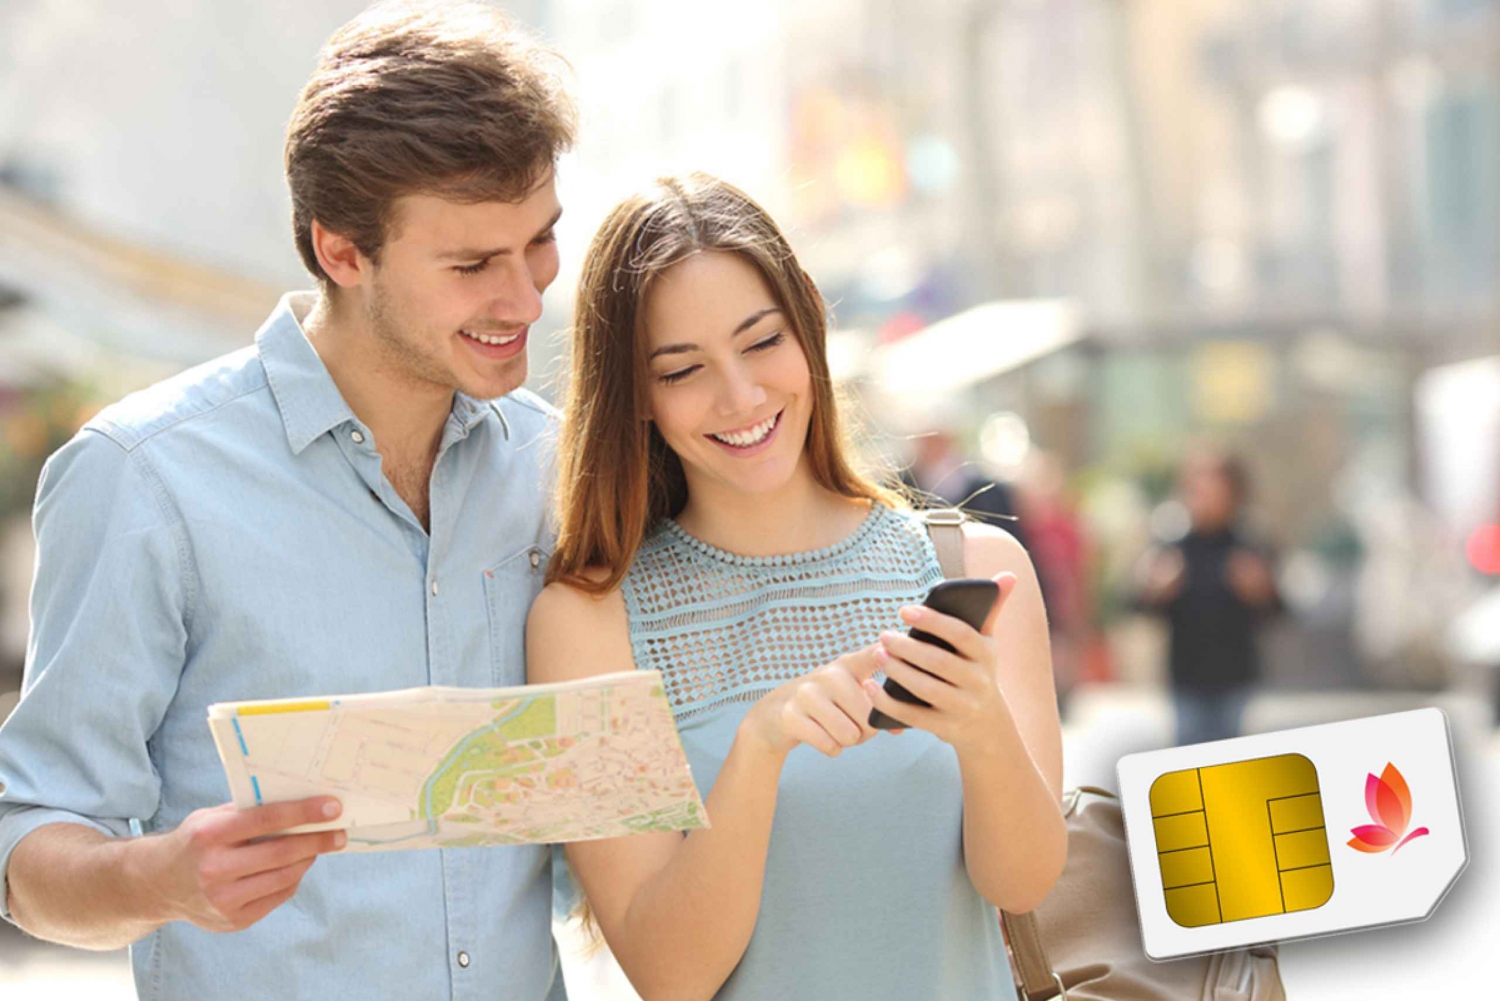 Dubai Airport: 5G/4G Tourist SIM Card for UAE Data and Calls